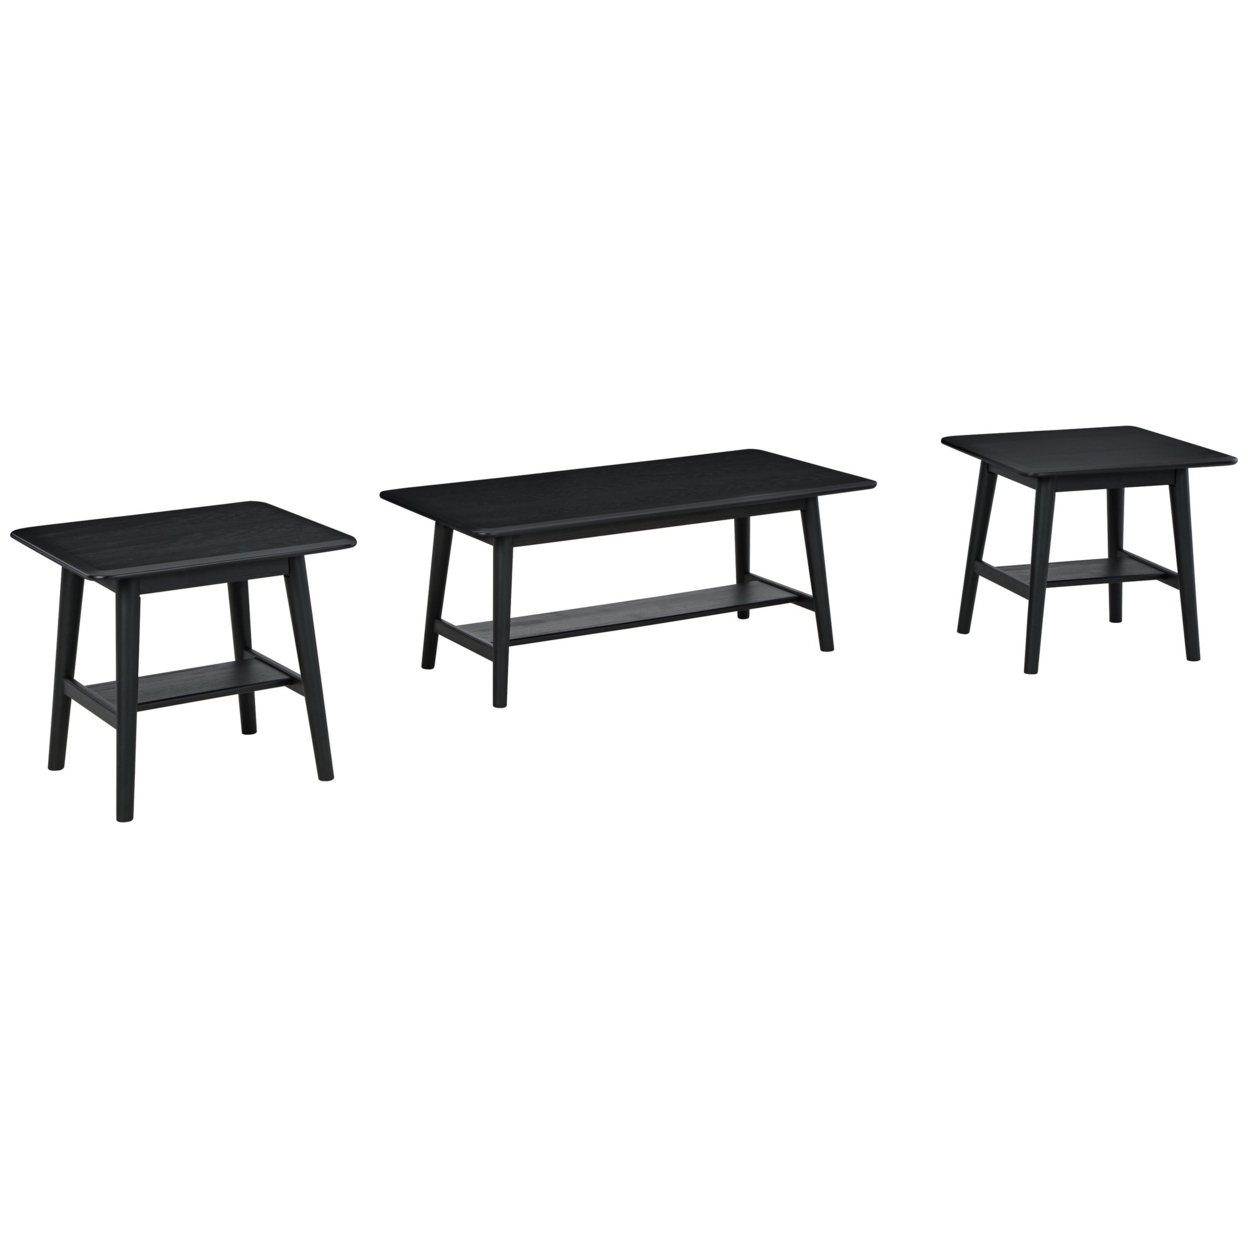 Edan 3 Piece Coffee And End Table Set With Shelves, Metal And Wood, Black- Saltoro Sherpi